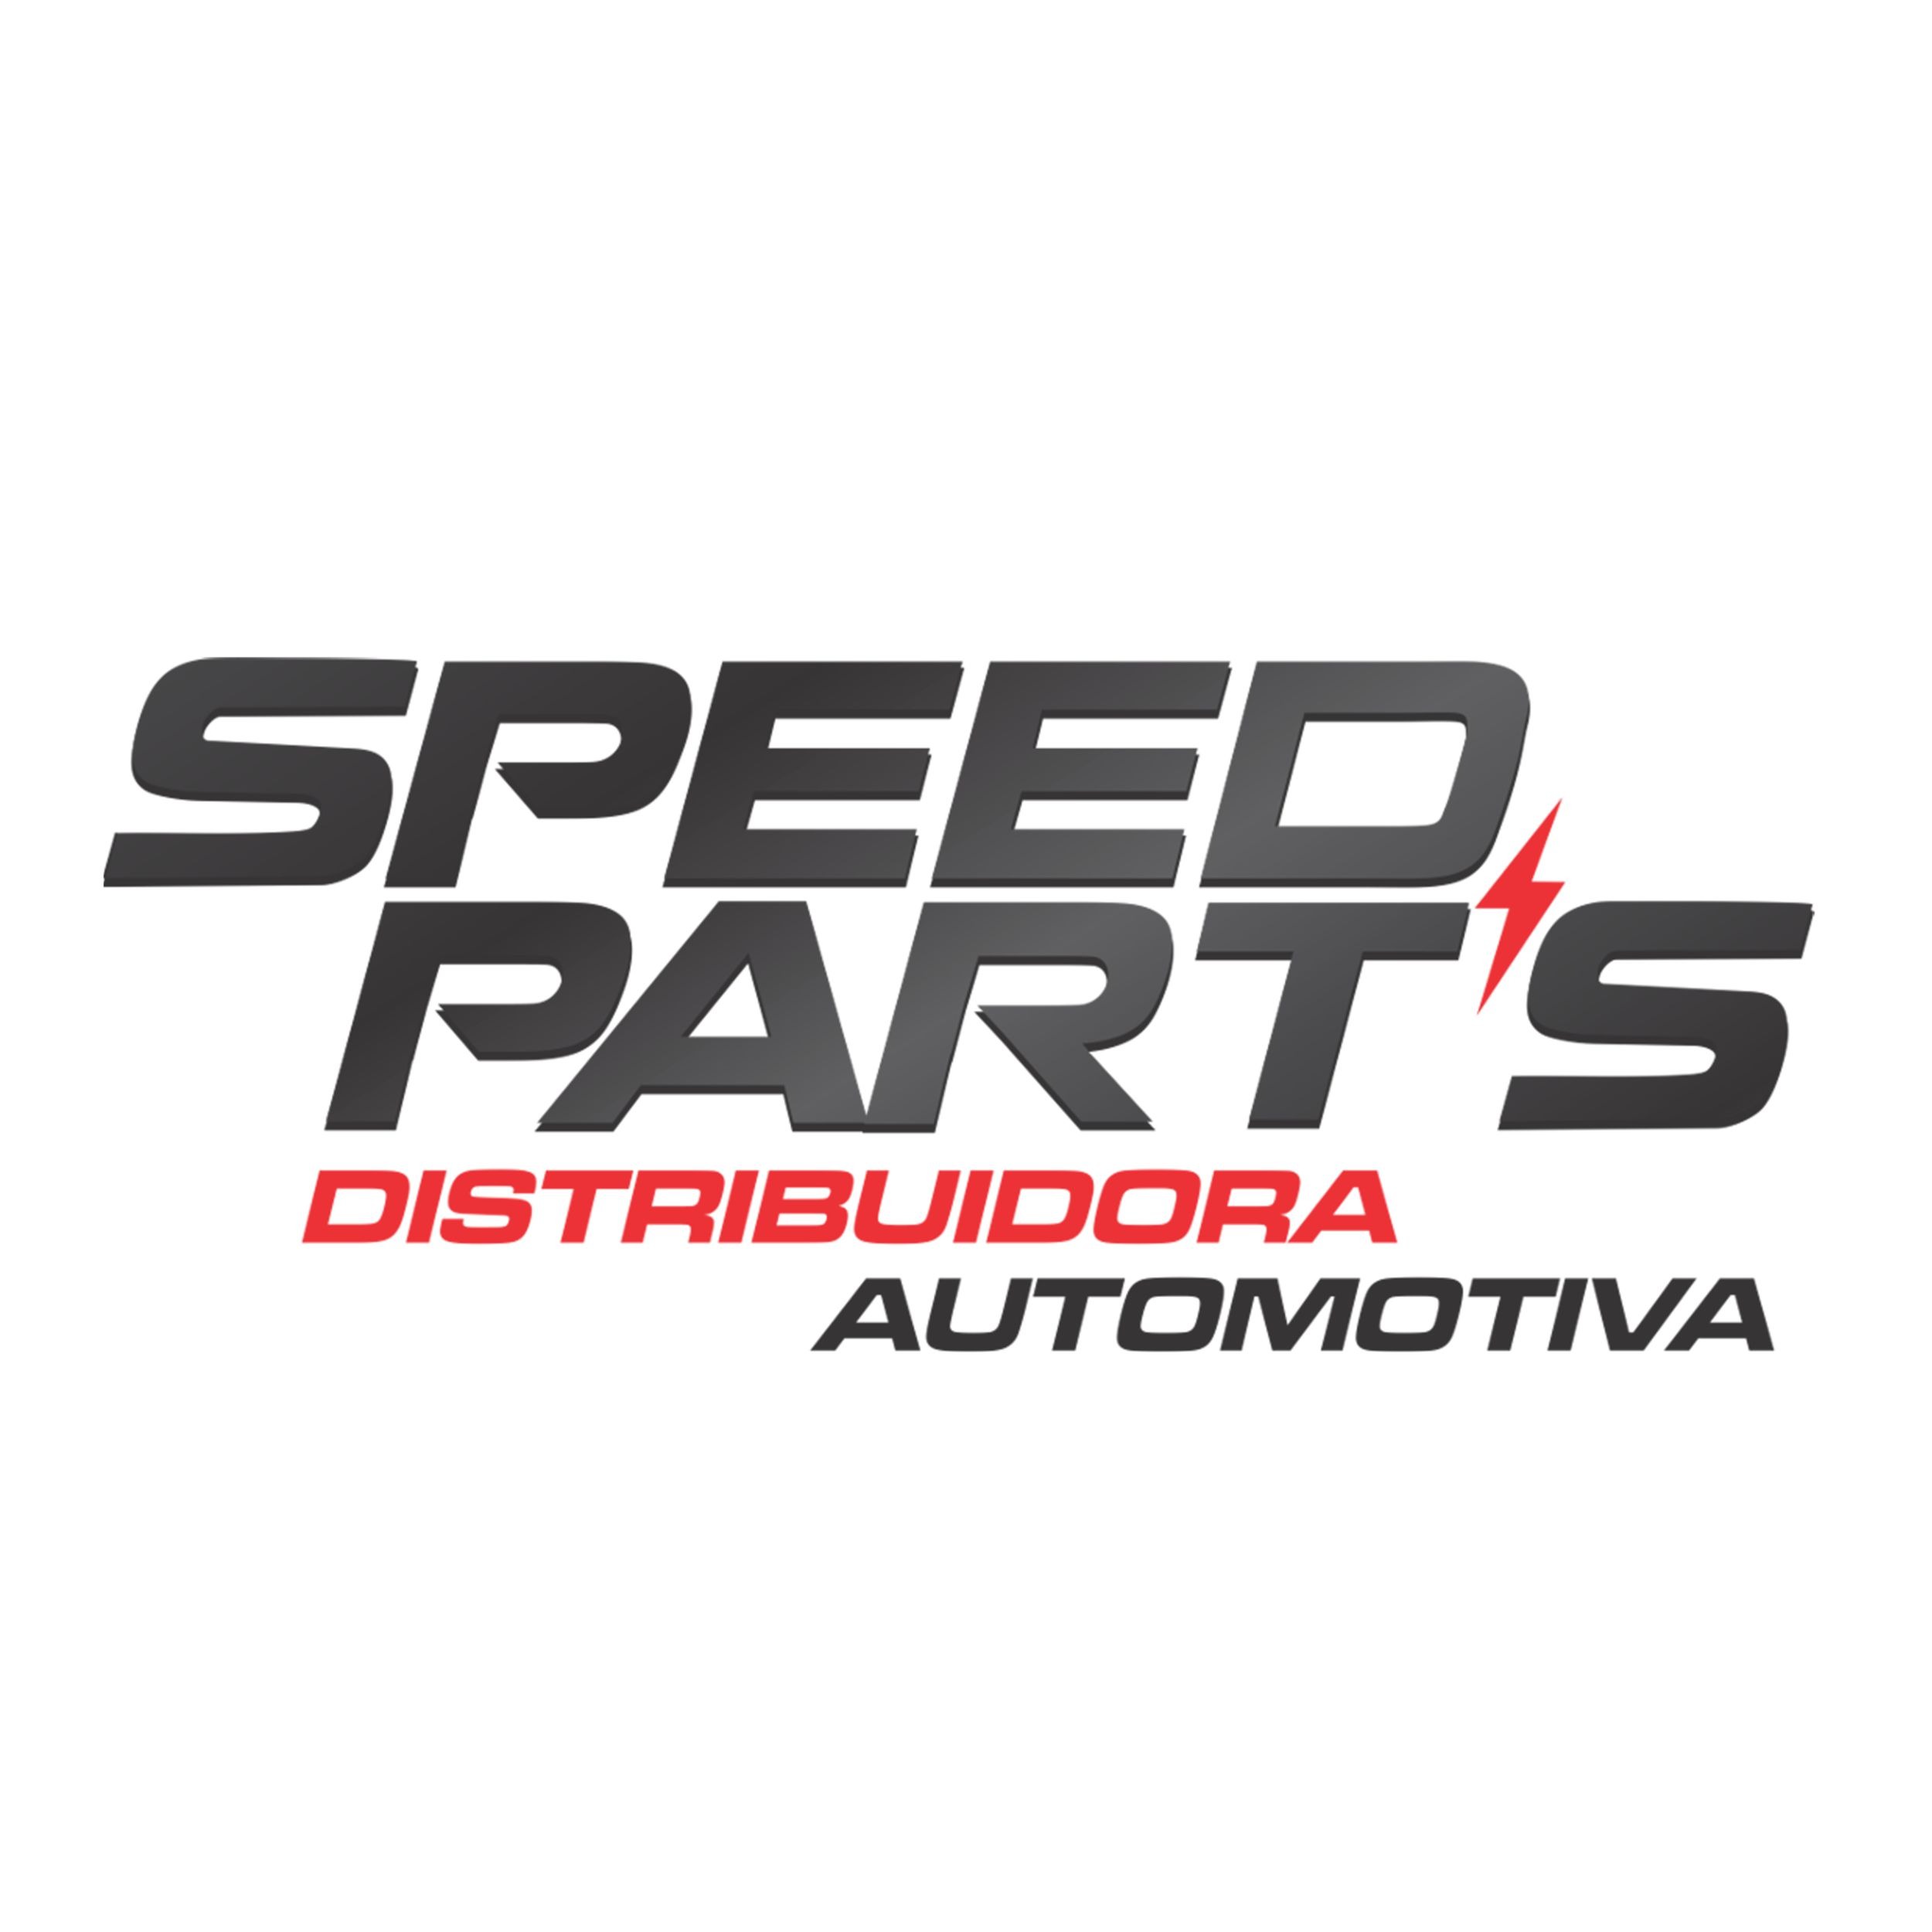 Speed Parts Distribuidora Automotiva